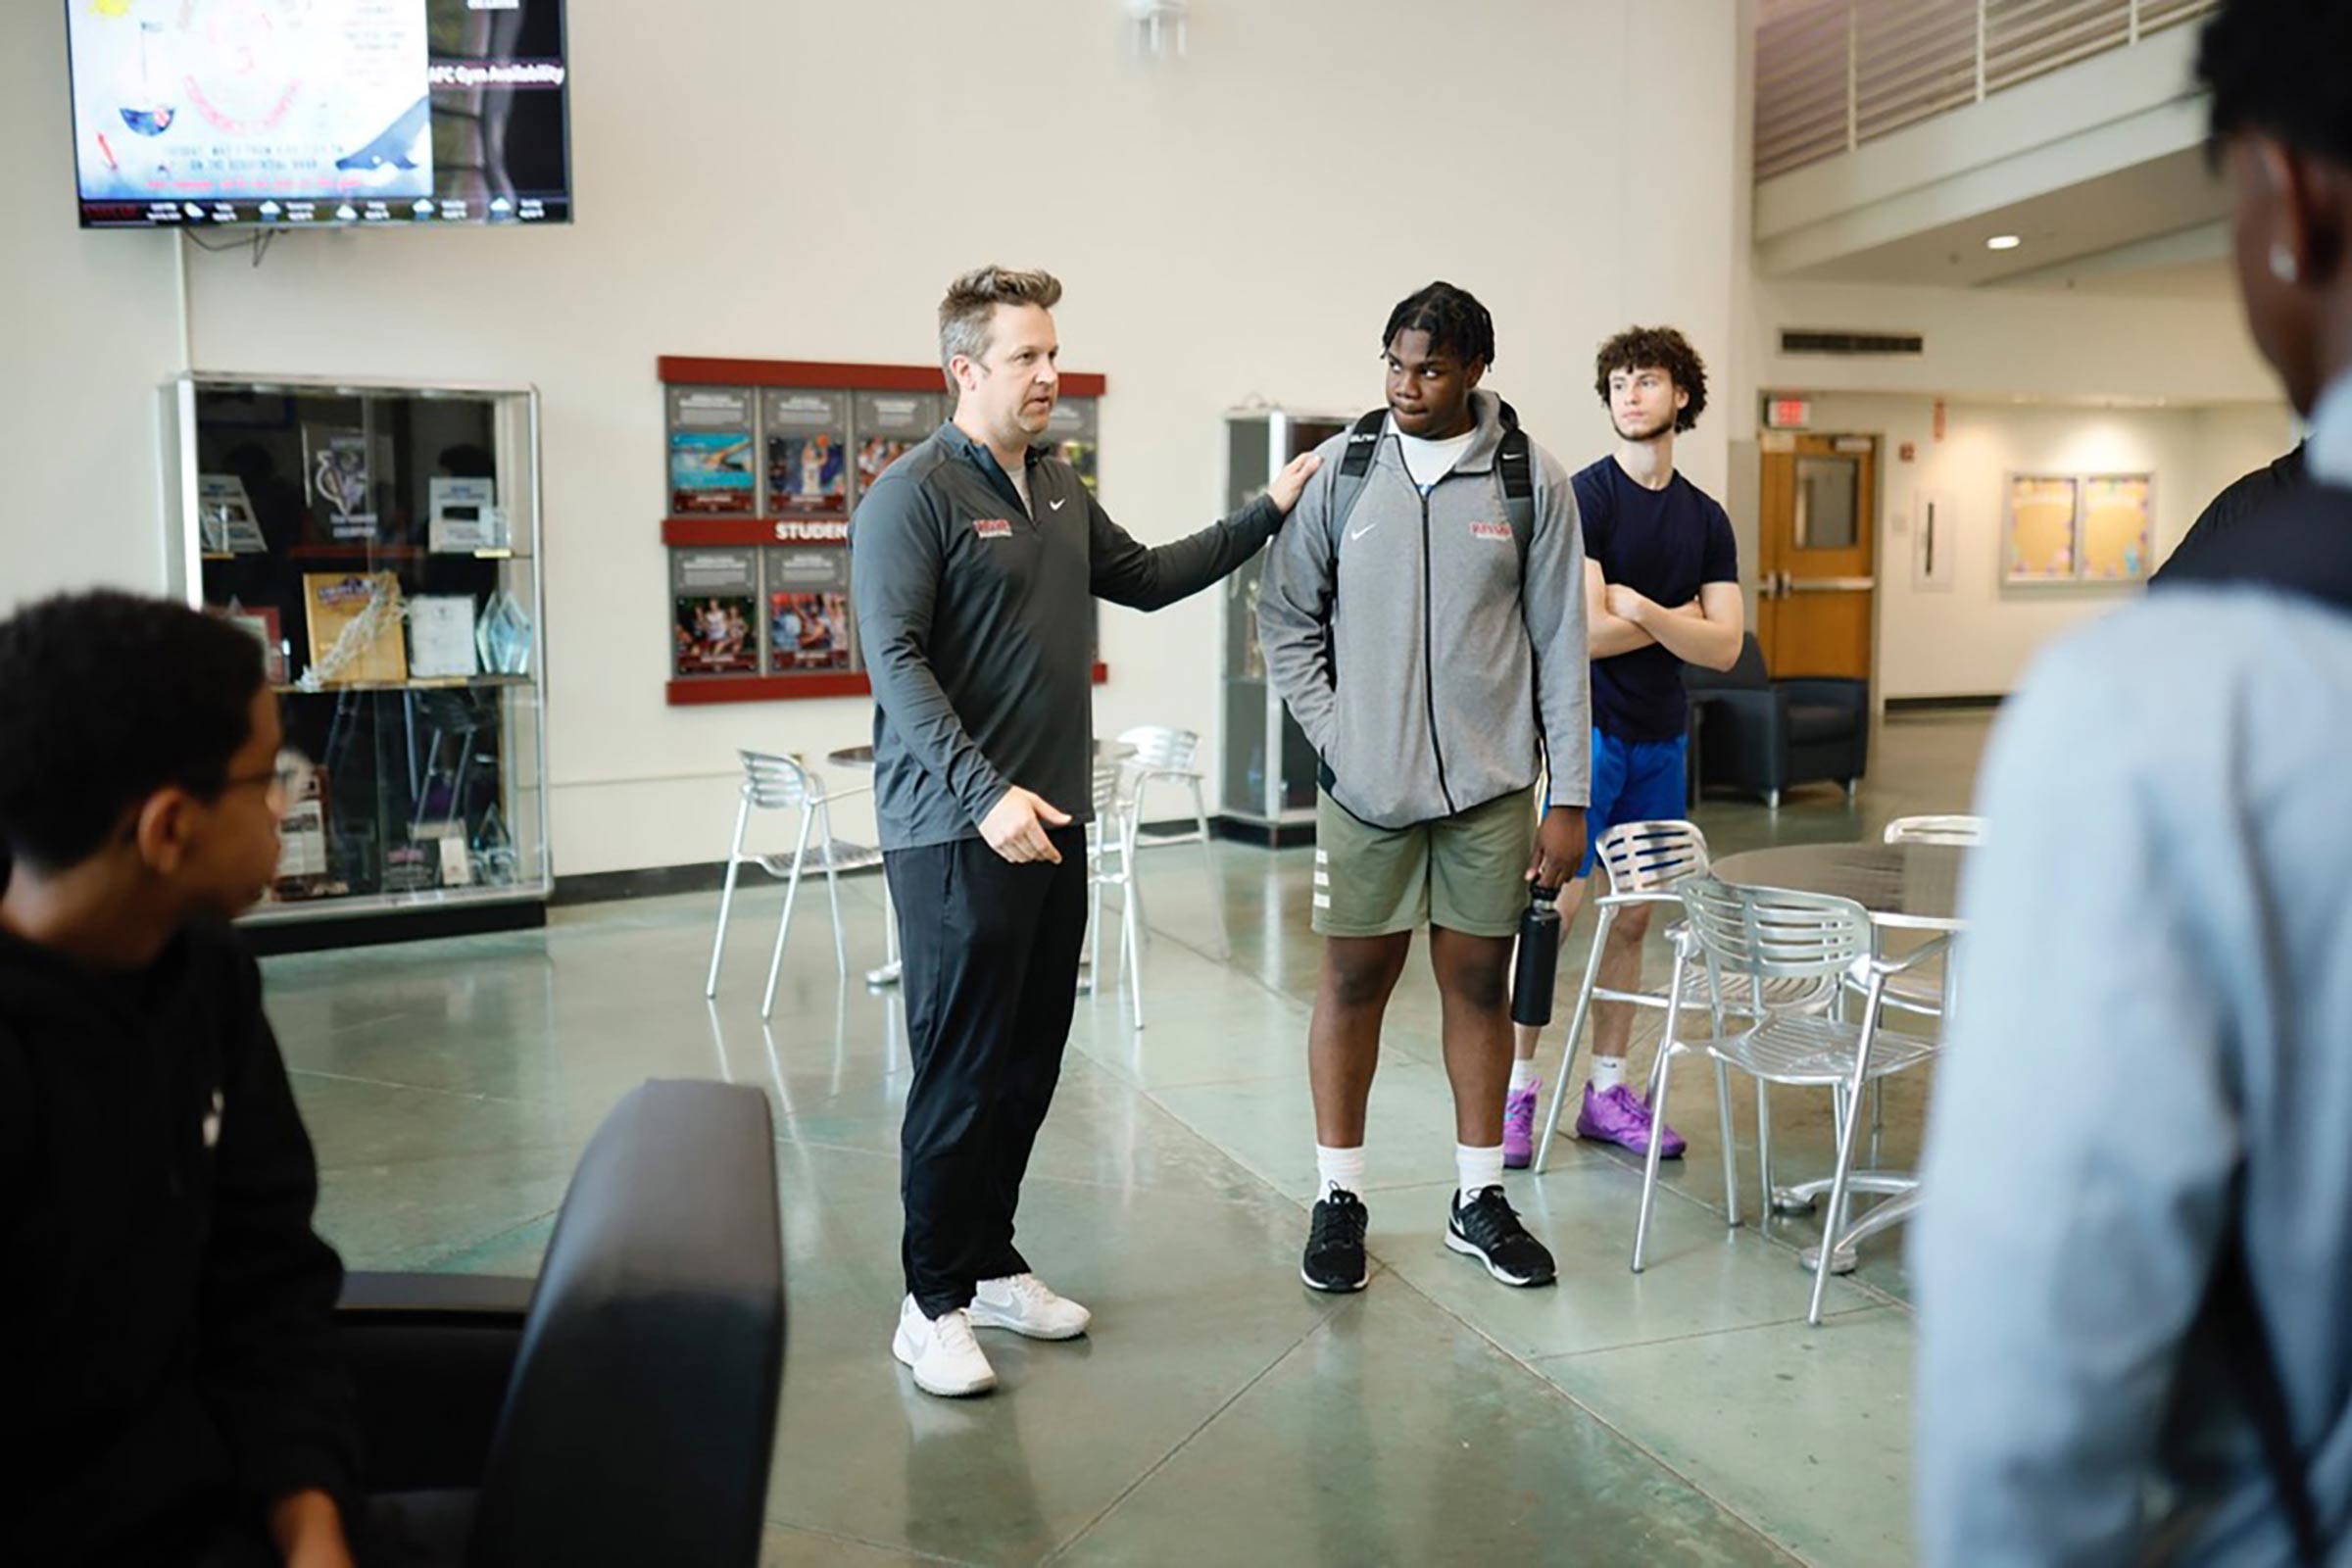 Vassar Men’s Basketball Coach Ryan Mee and Benson talk in the Fitness Center.